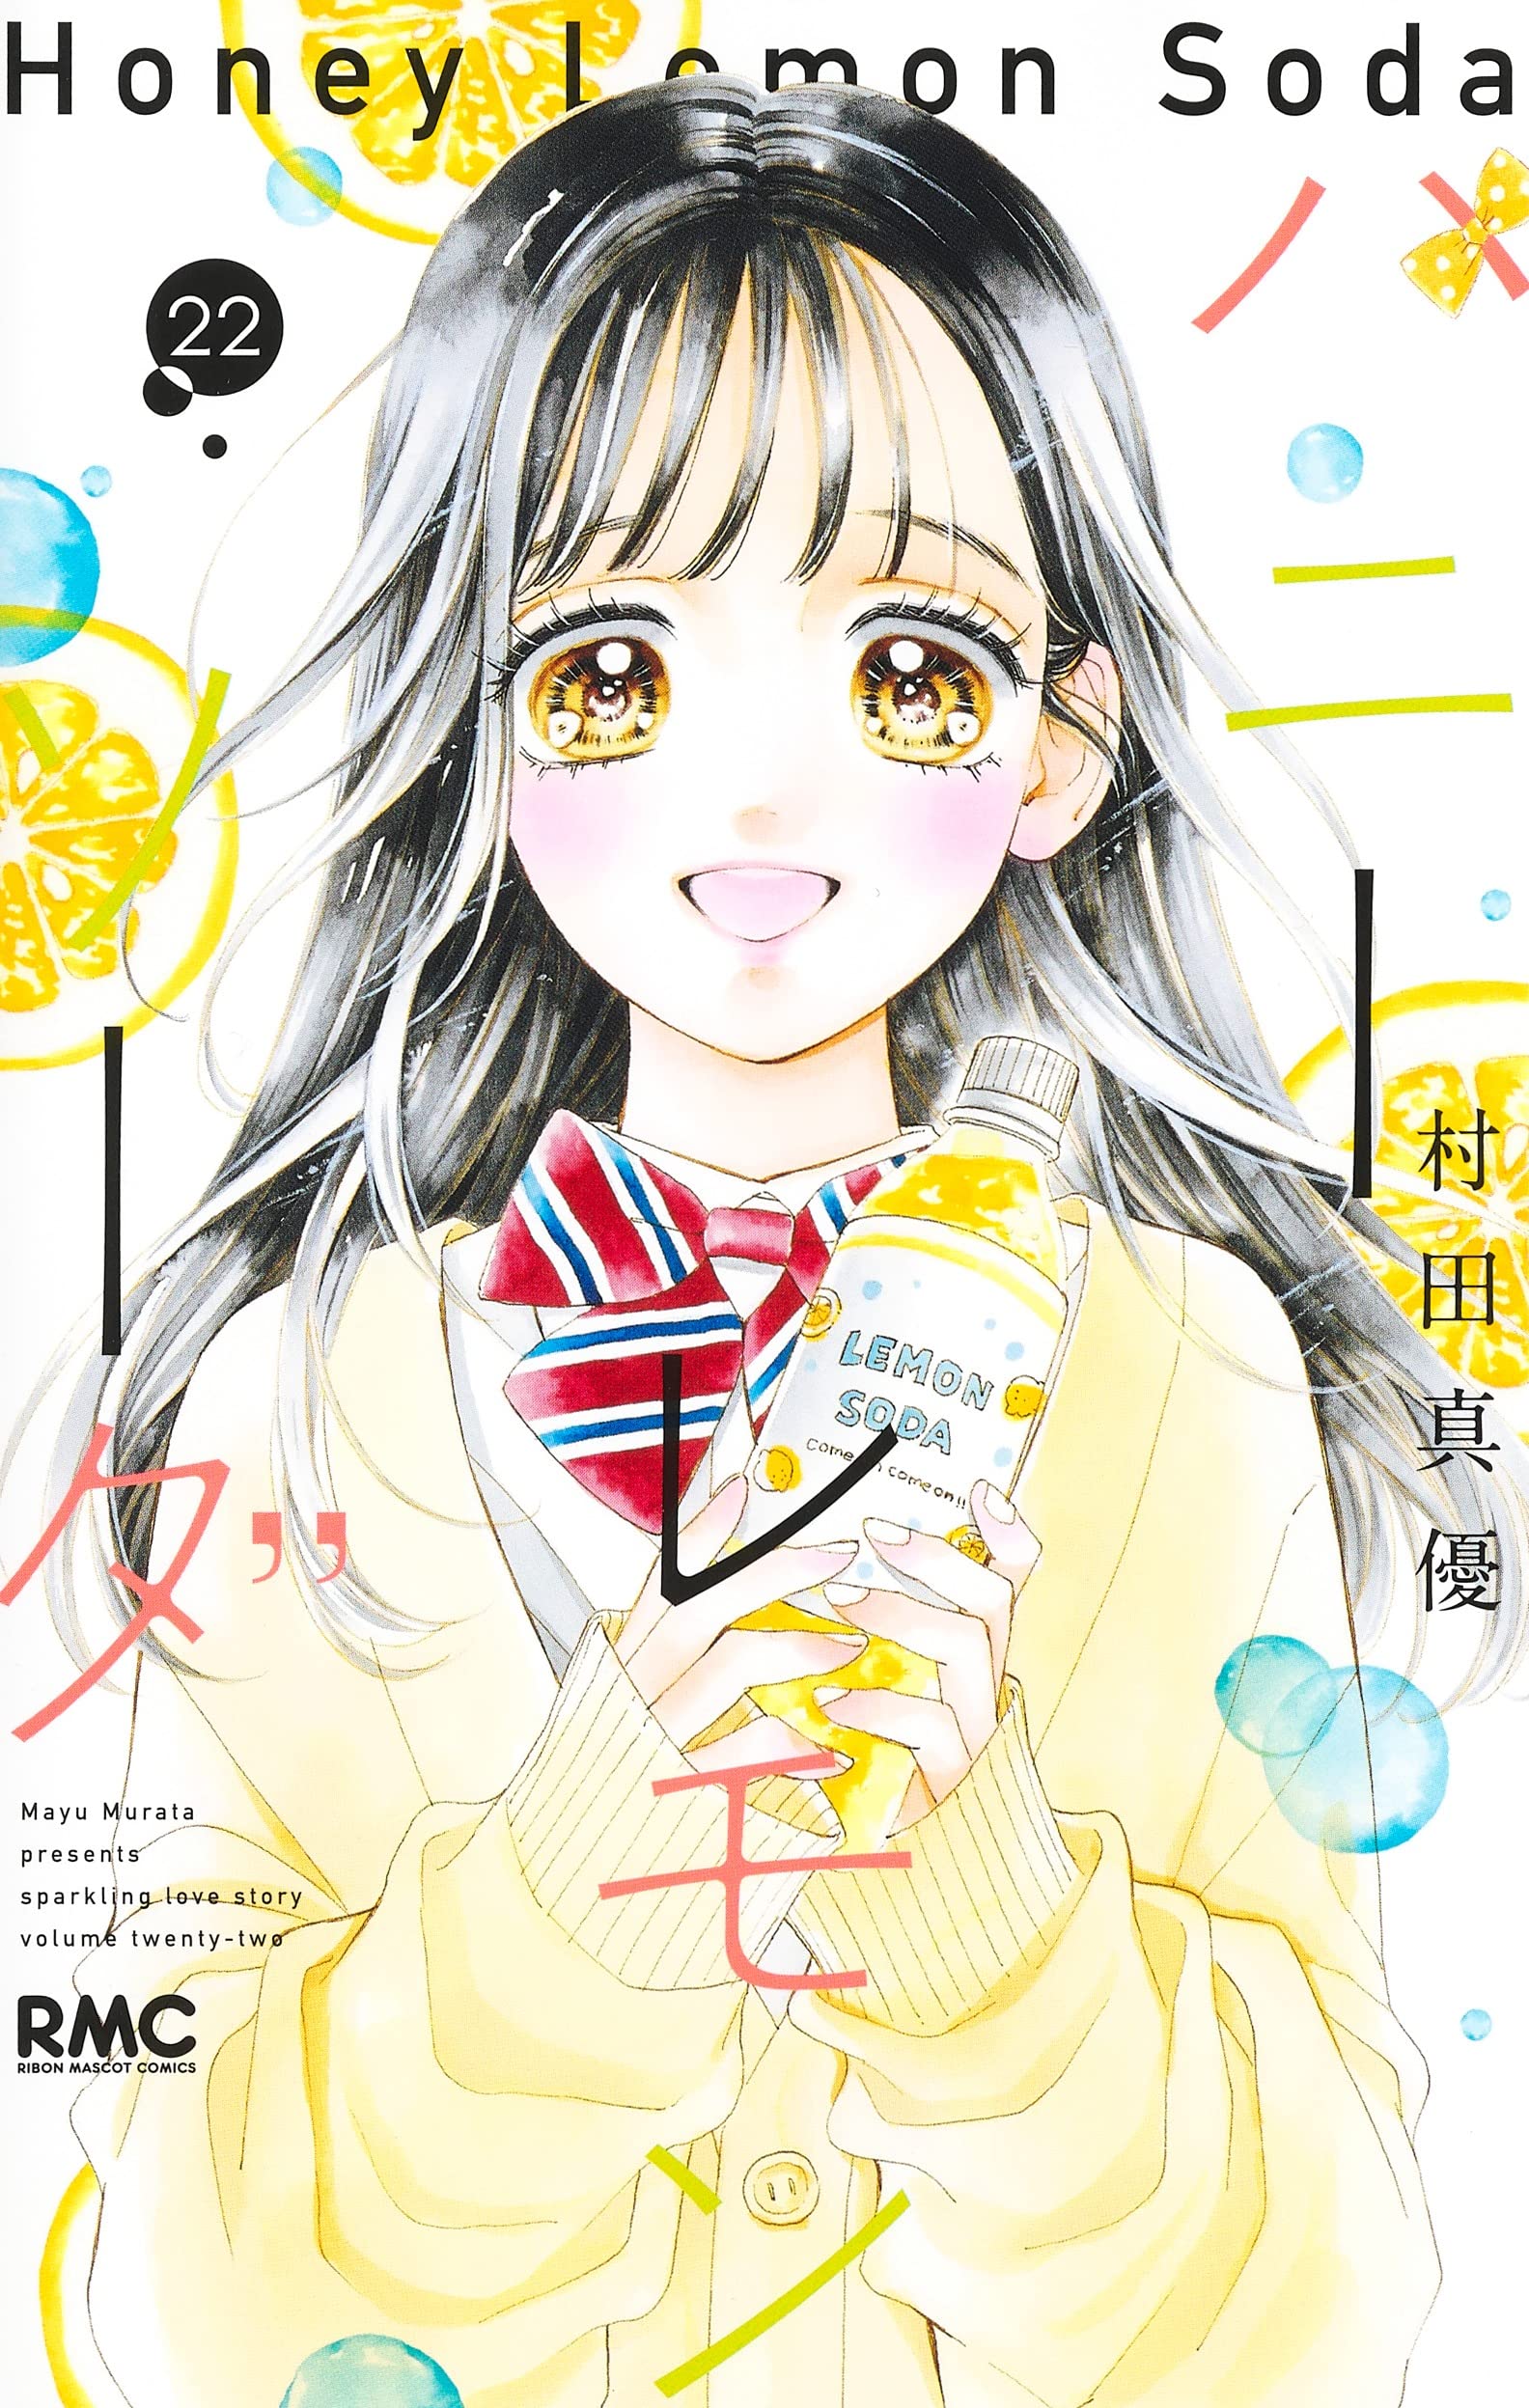 Манга сладкий лимонад. Honey Lemon Soda Manga. Сладкий лимонад Honey Lemon Soda. Мед лимон сода дорама. Манга лимон